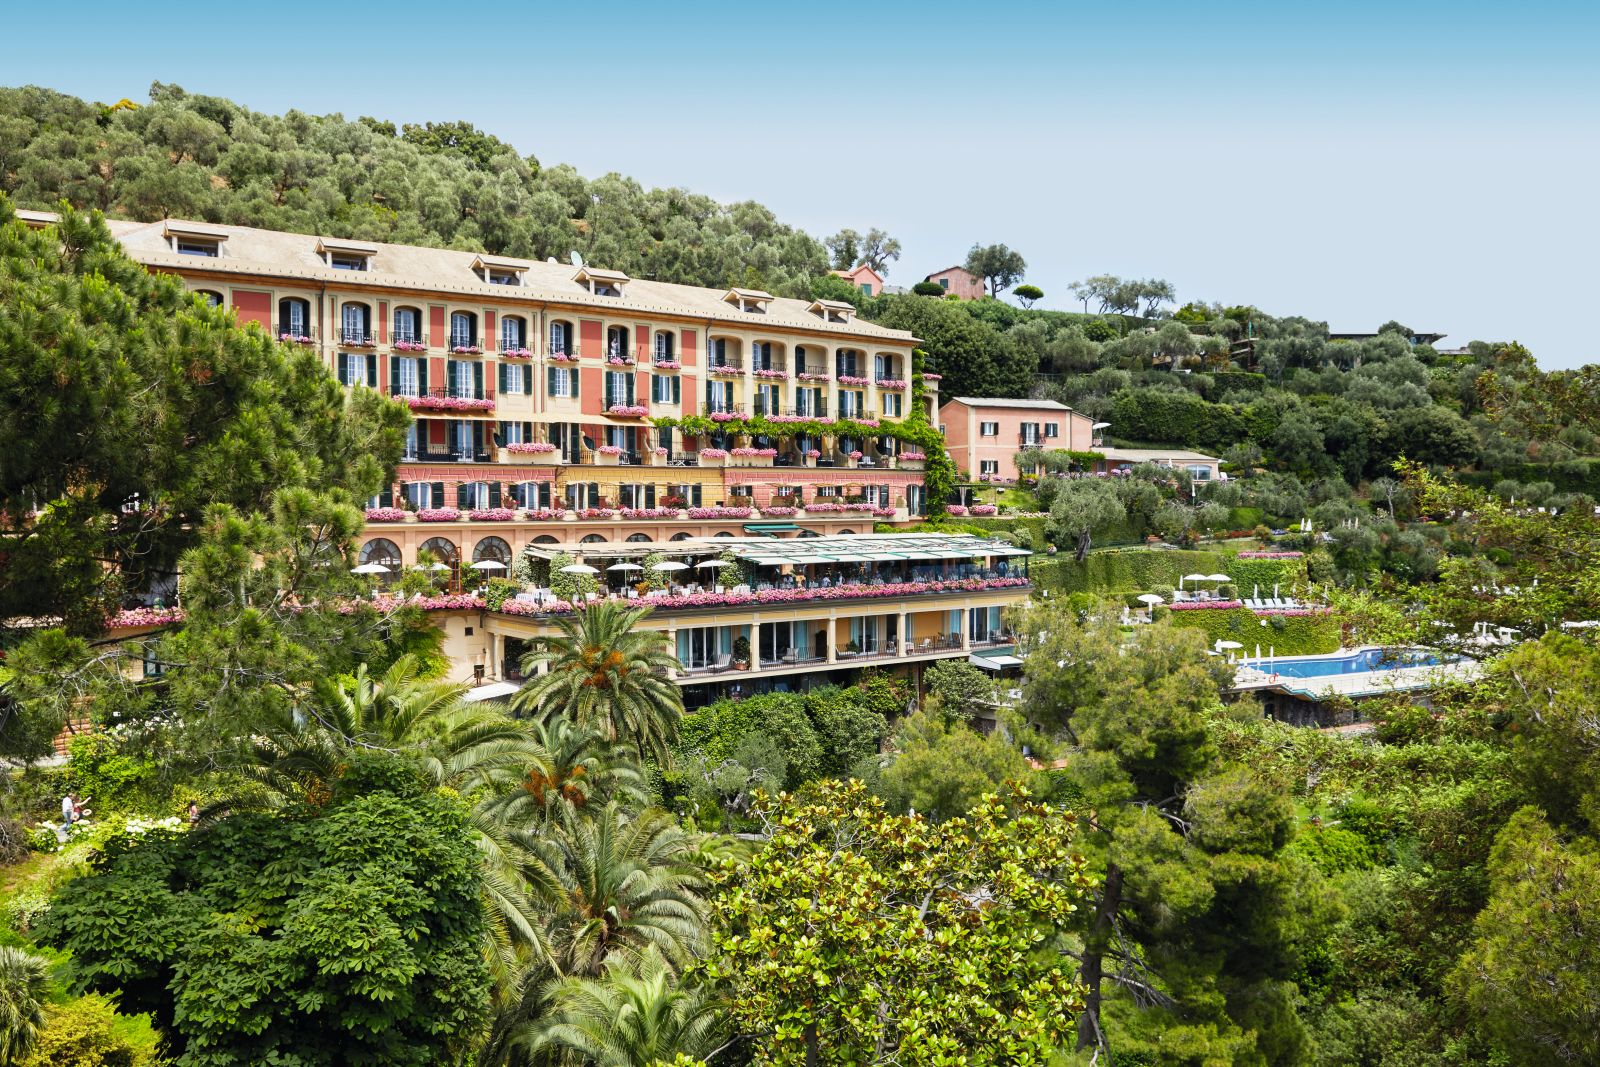 The exterior of the Belmond Hotel Splendido Portofino Italy